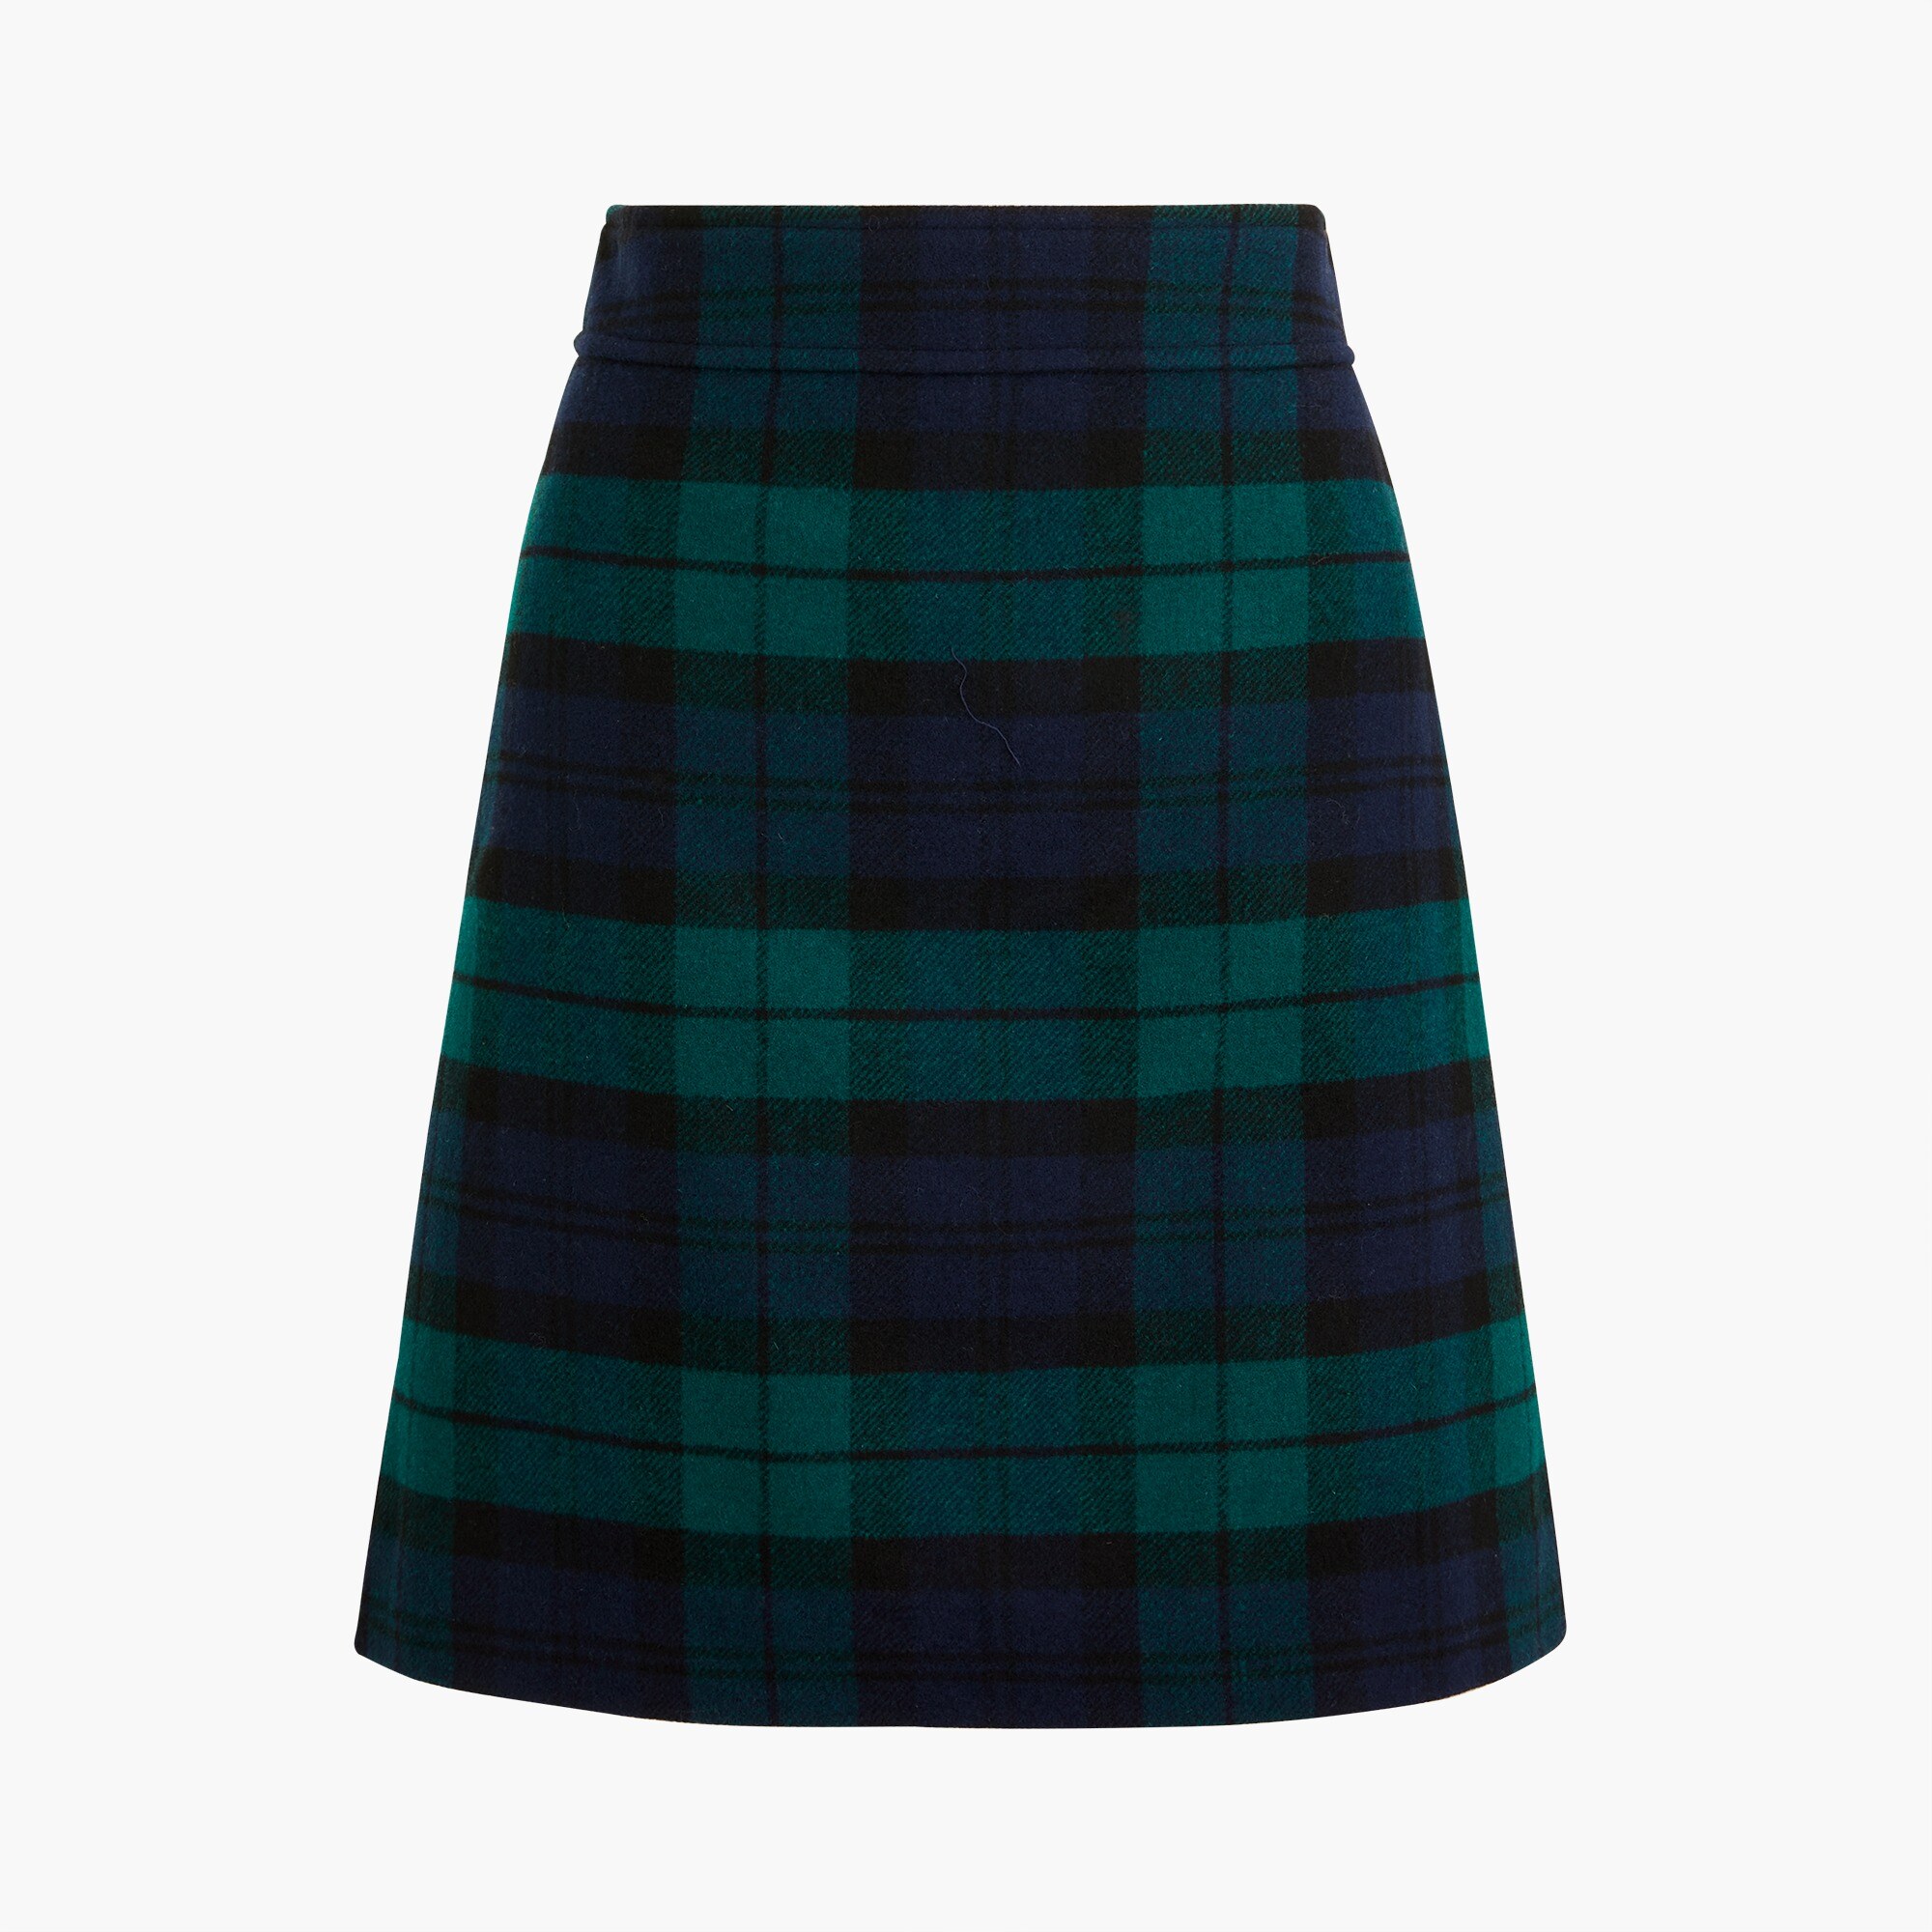  Wool-blend mini skirt in Black Watch plaid